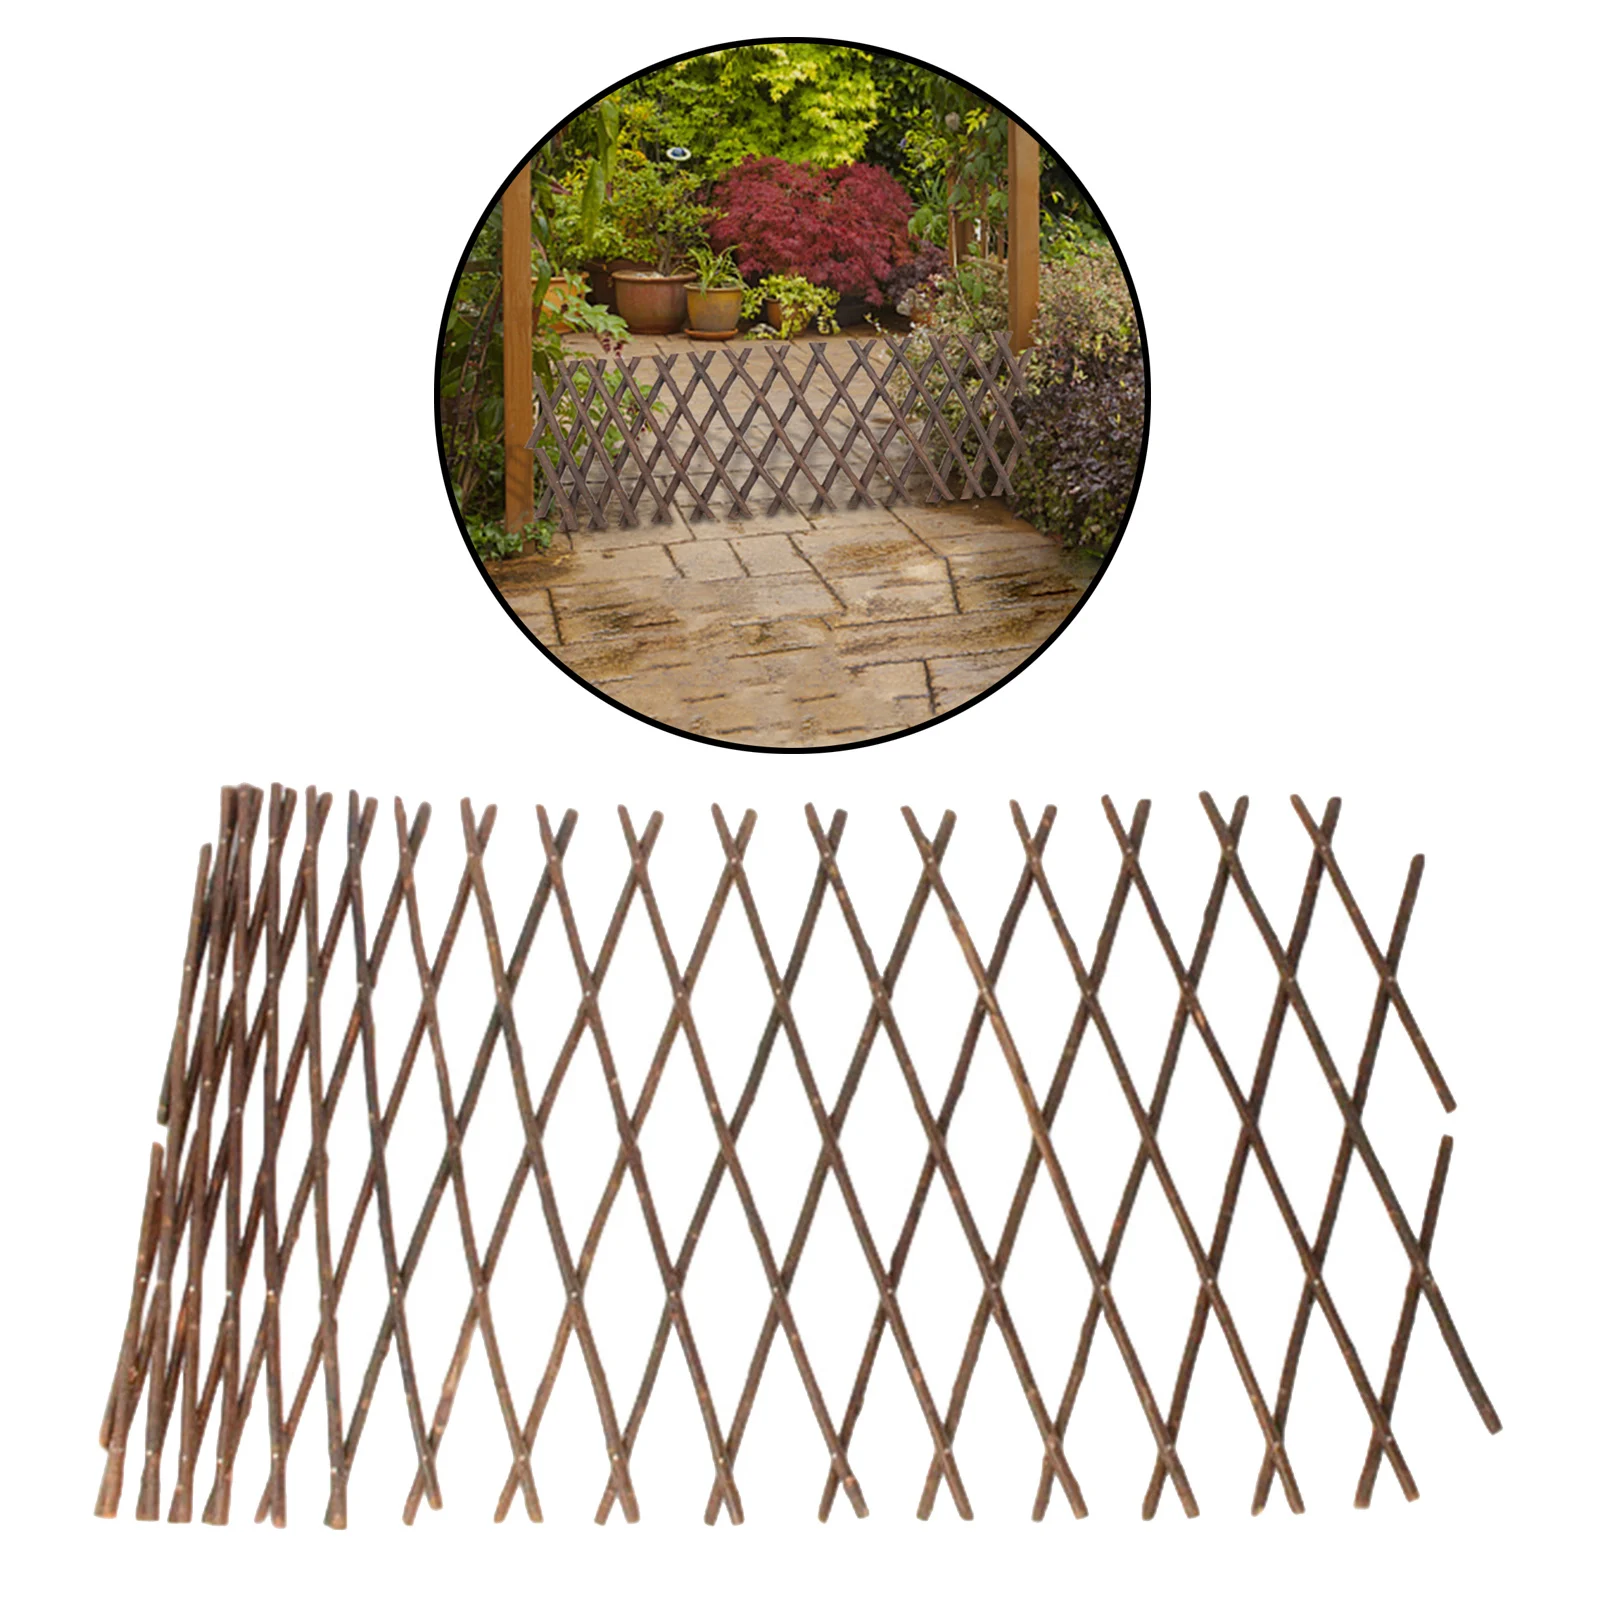 Expanding Bamboo Wooden Garden Trellis Retractable Plant Lattice Panel